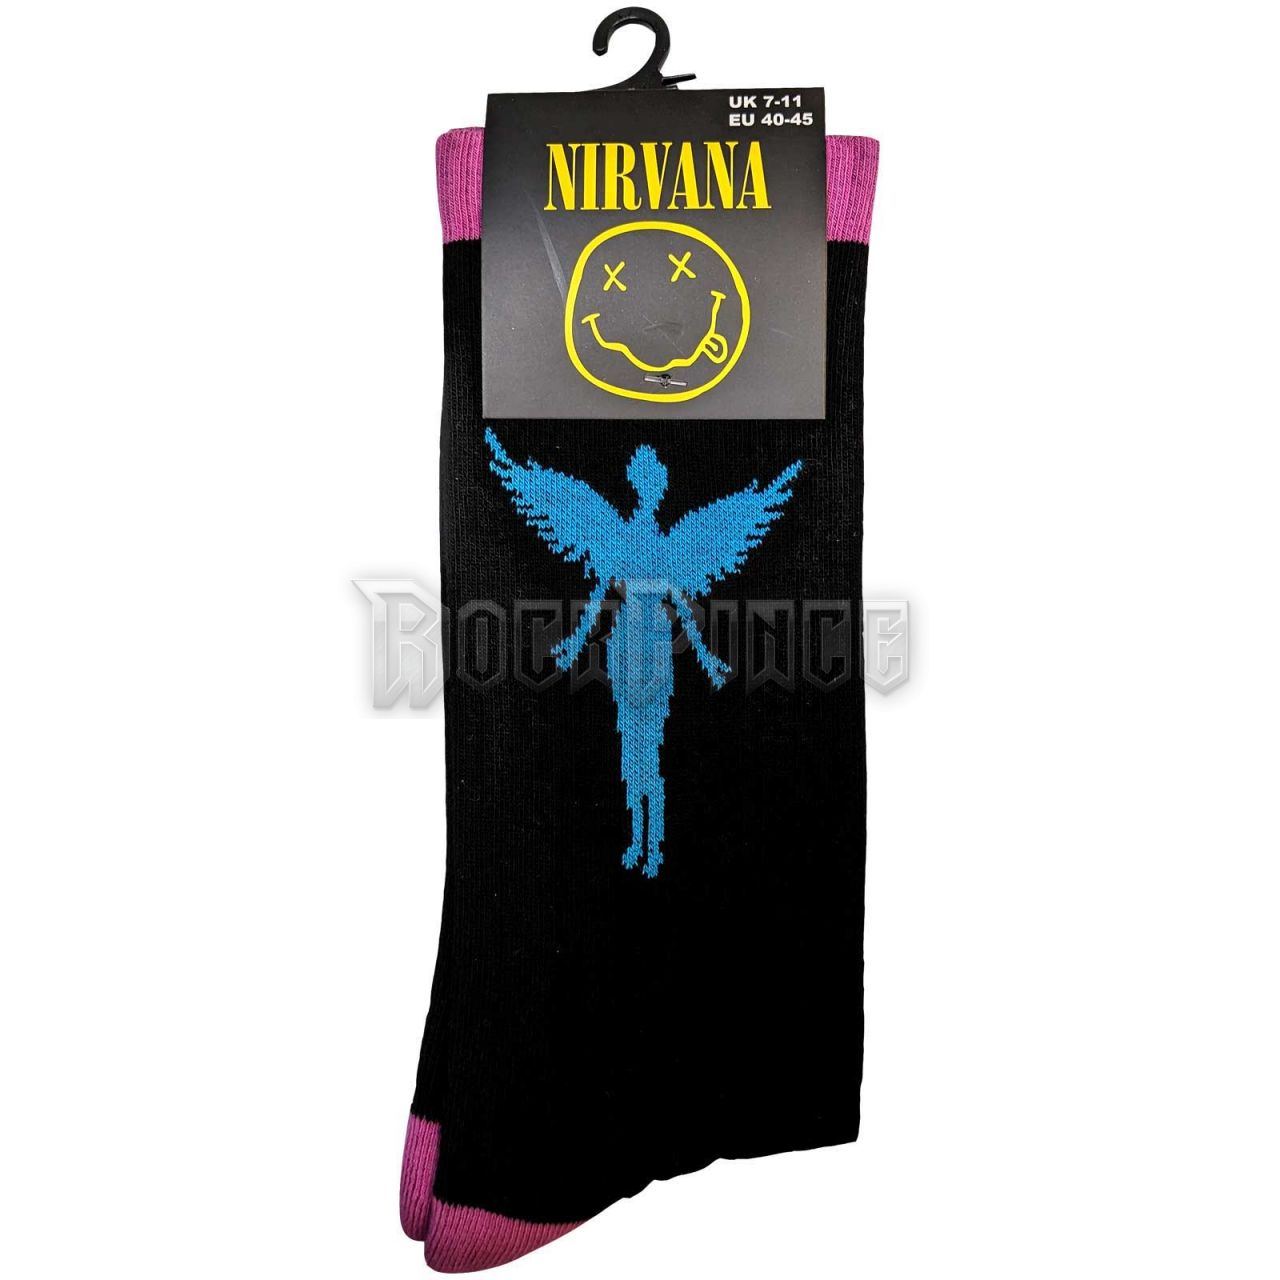 Nirvana - In Utero Blue Angel - unisex bokazokni (egy méret: 40-45) - NIRVSCK09MB